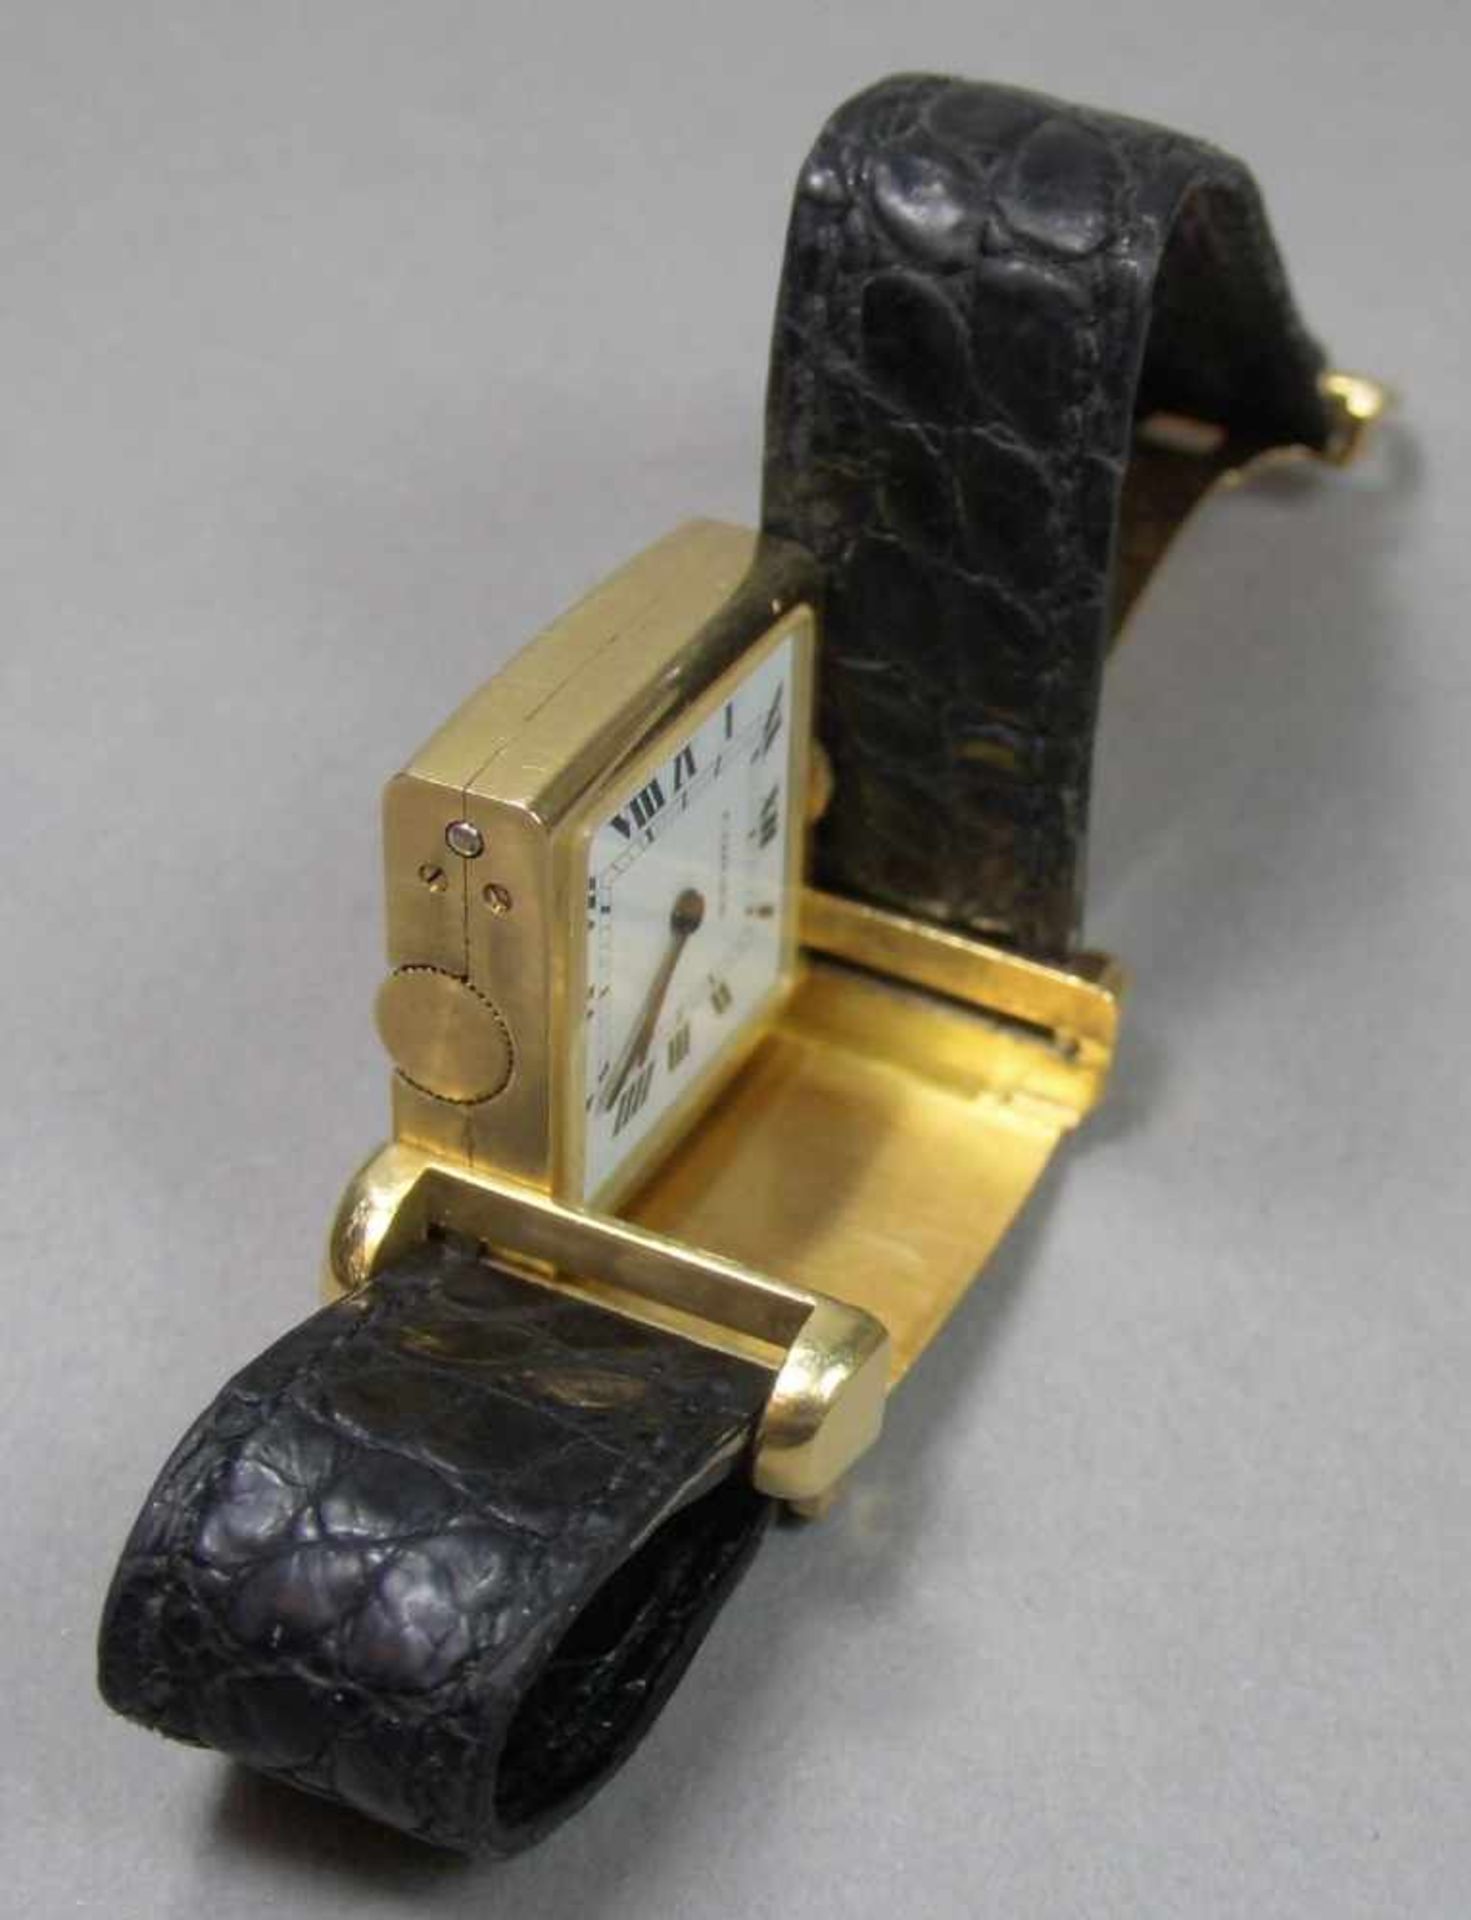 VINTAGE ARMBANDUHR CARTIER REVERSO / wristwatch, Handaufzug, wohl 1970er Jahre, Manufaktur Cartier / - Image 5 of 9